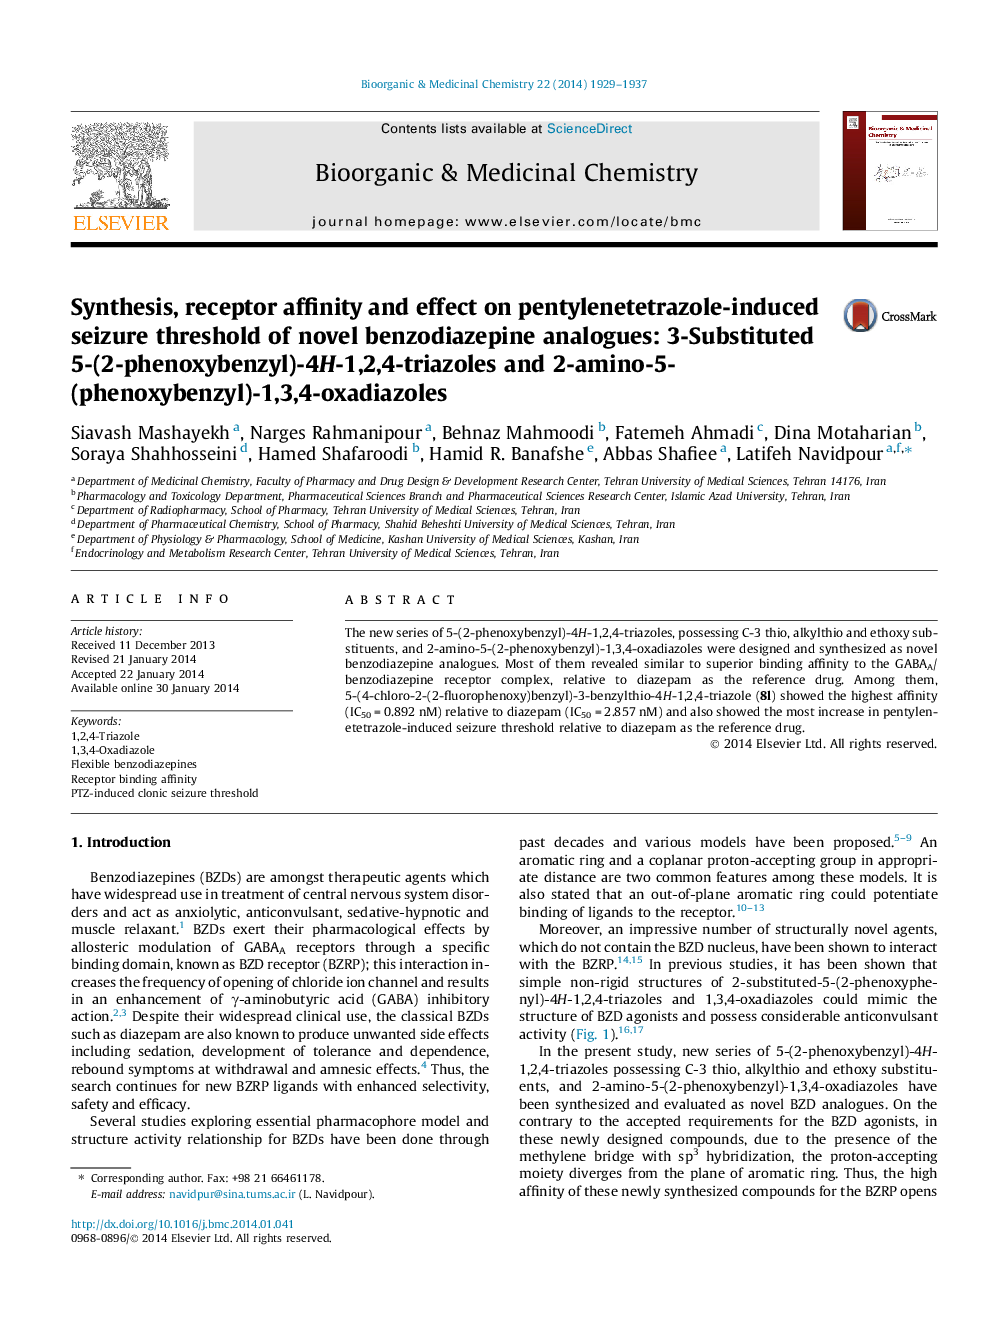 Synthesis, receptor affinity and effect on pentylenetetrazole-induced seizure threshold of novel benzodiazepine analogues: 3-Substituted 5-(2-phenoxybenzyl)-4H-1,2,4-triazoles and 2-amino-5-(phenoxybenzyl)-1,3,4-oxadiazoles